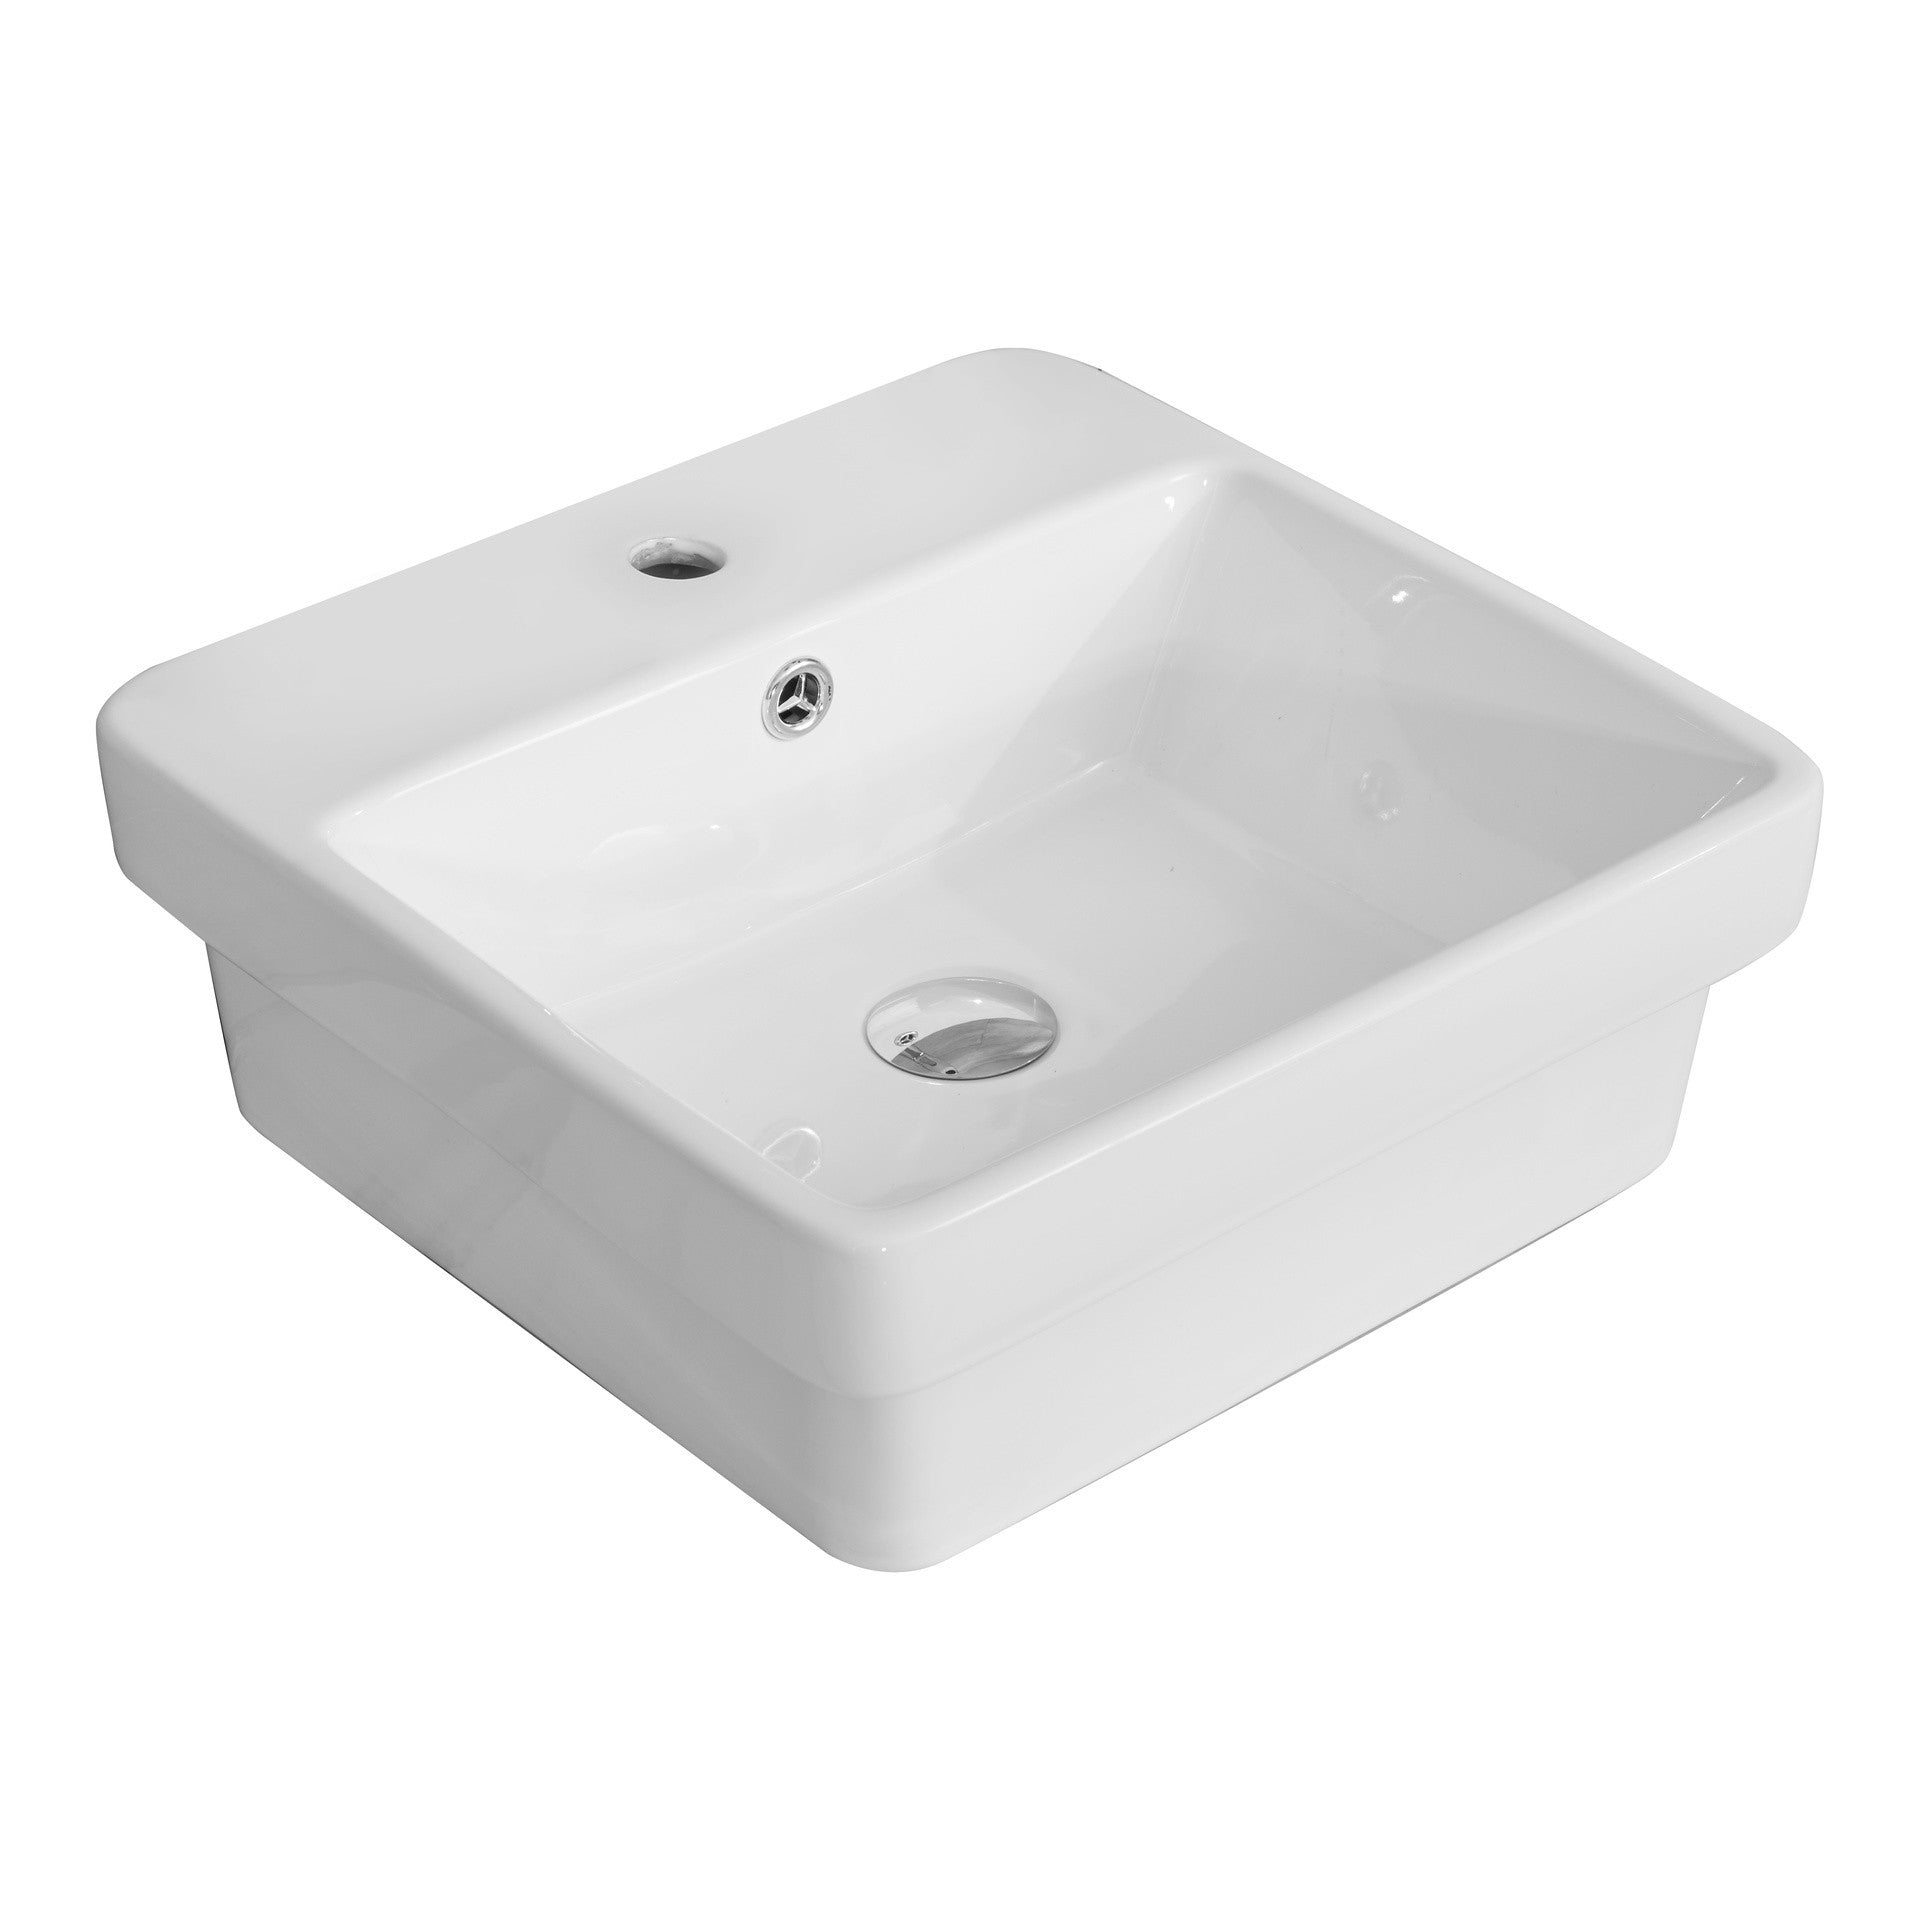 BASIN PI4141-TH: Stylish Touchless Bathroom Basin With Premium Durability